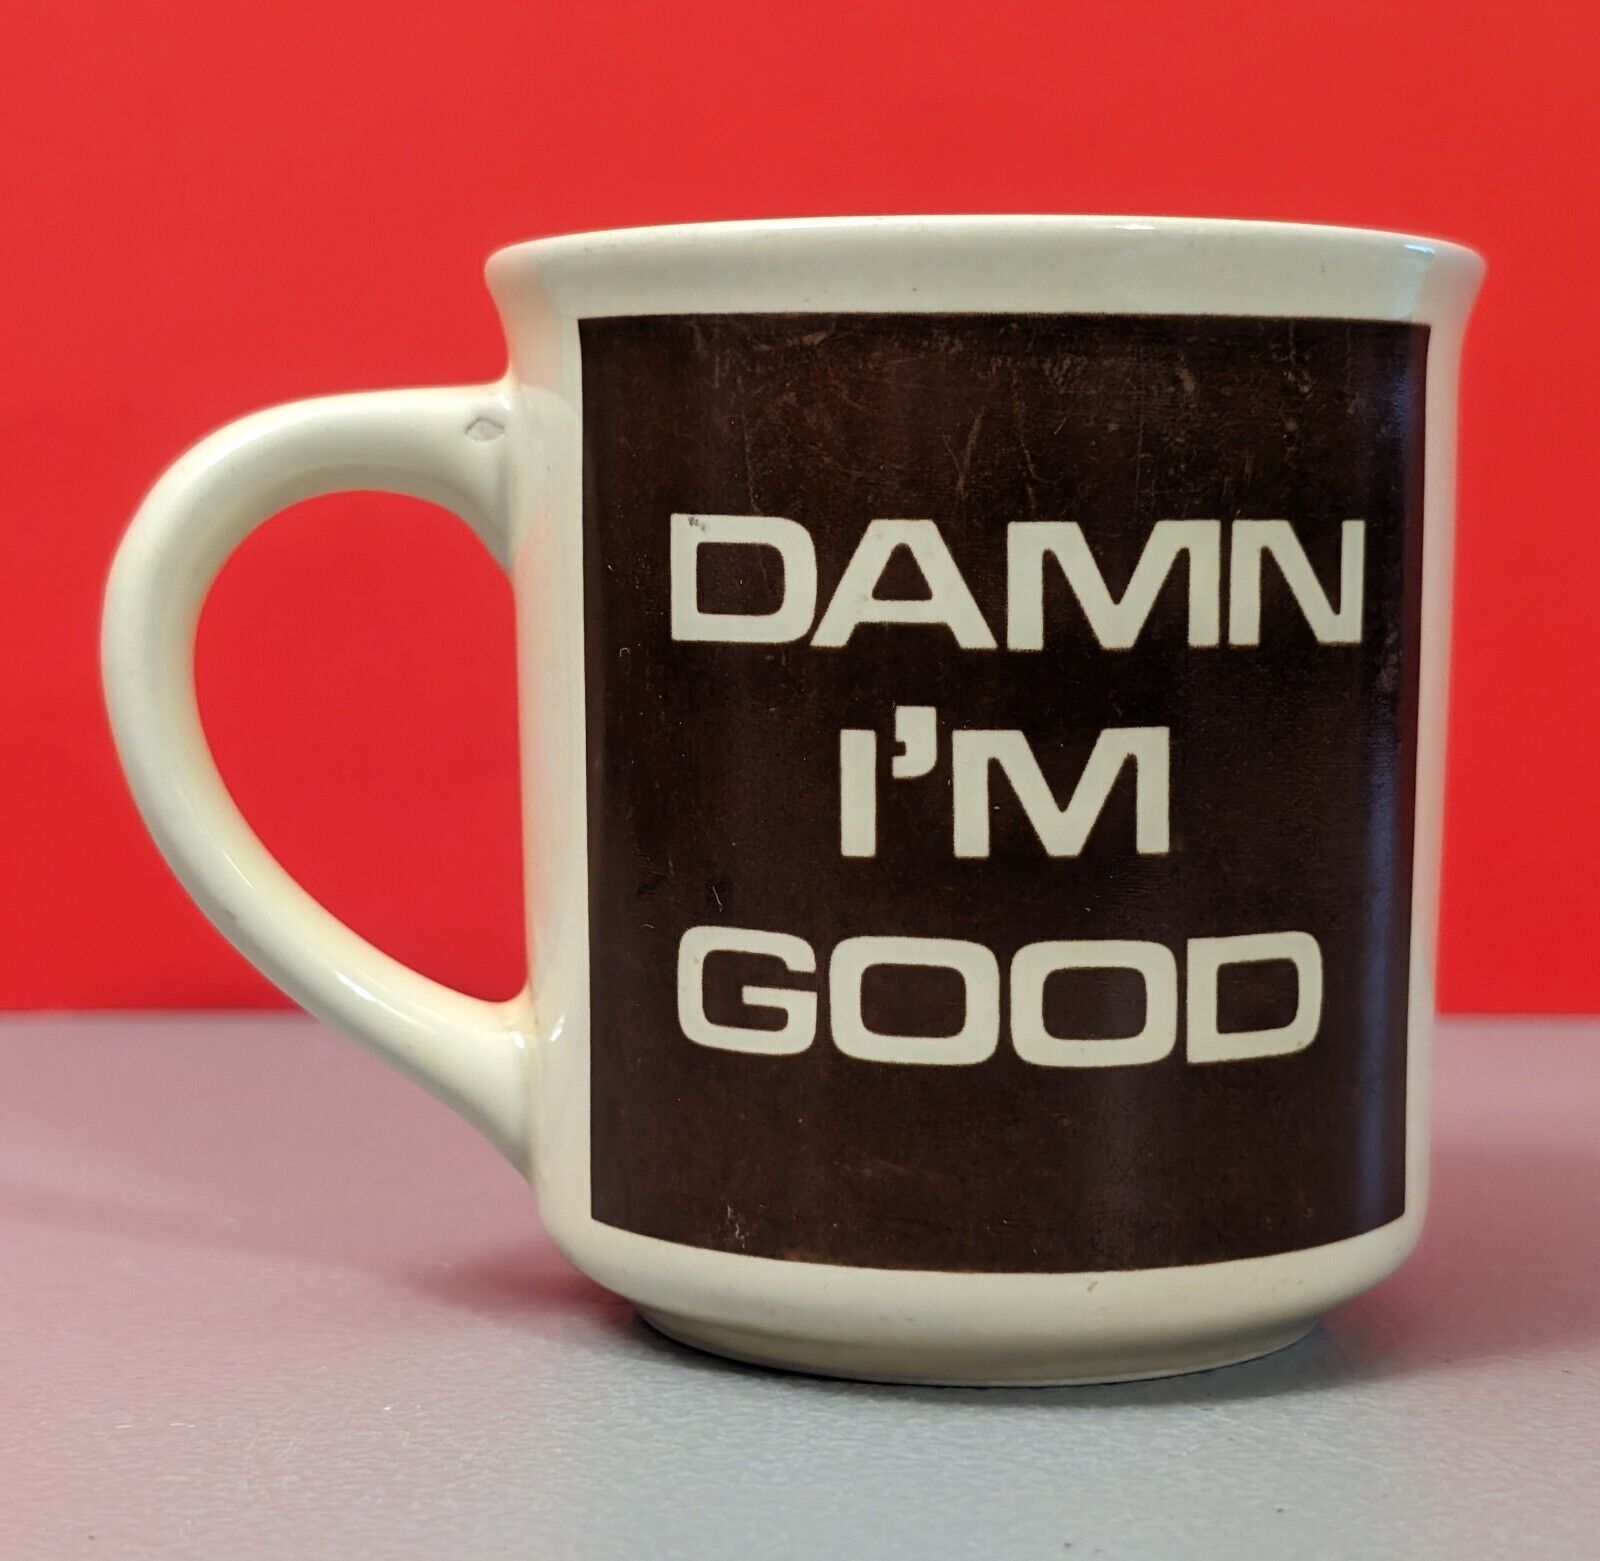 Vintage Damn I'm Good Coffee Mug - George Good Message Korea - Retro Humor Cup